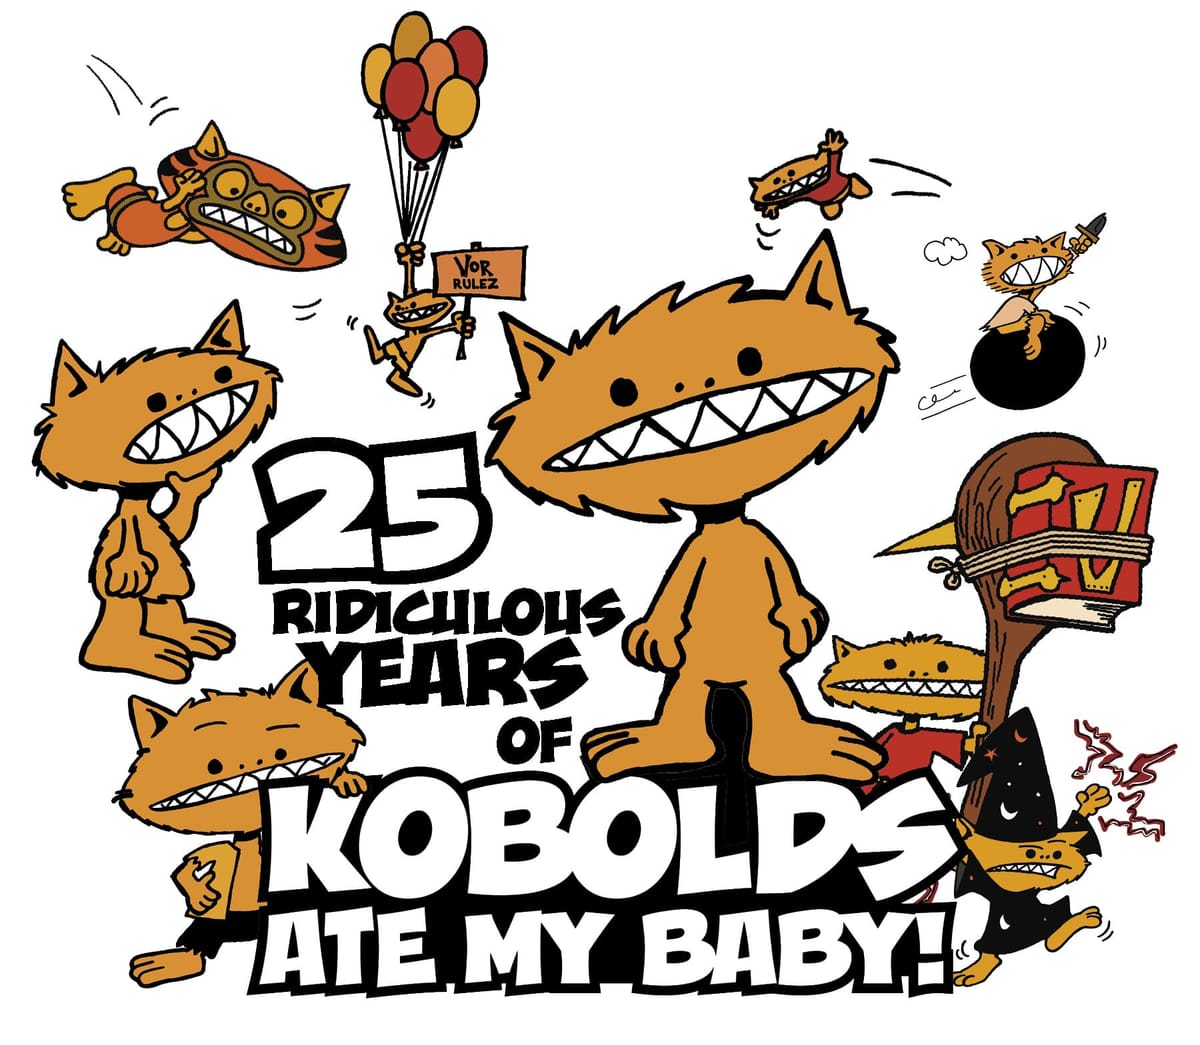 Kobolds Ate My Baby turns 25!